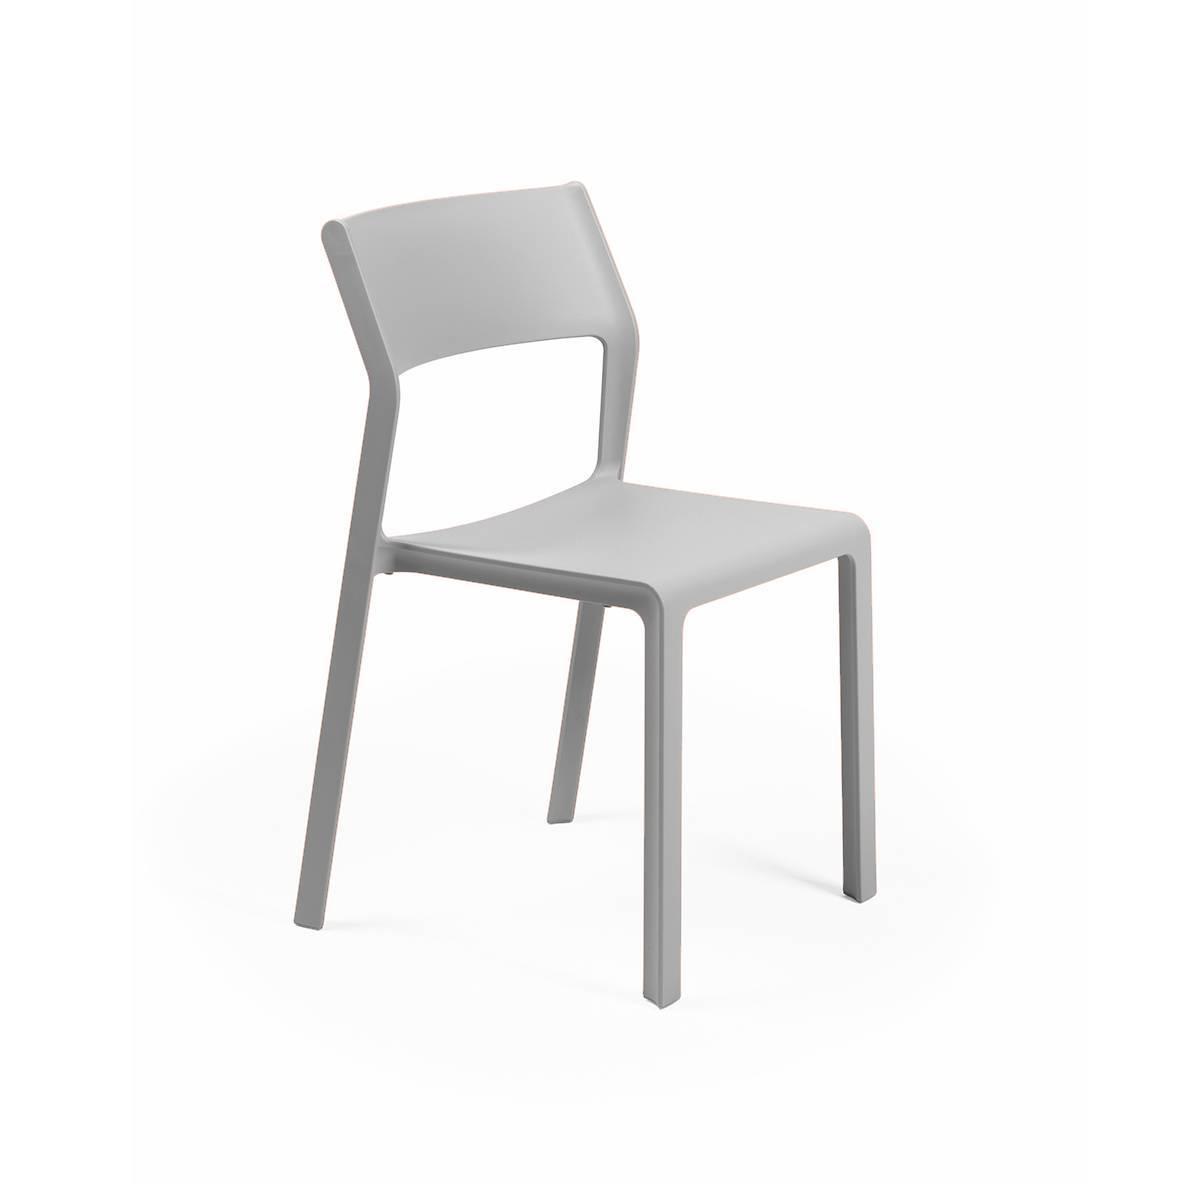 Nardi - Trill bistro chair